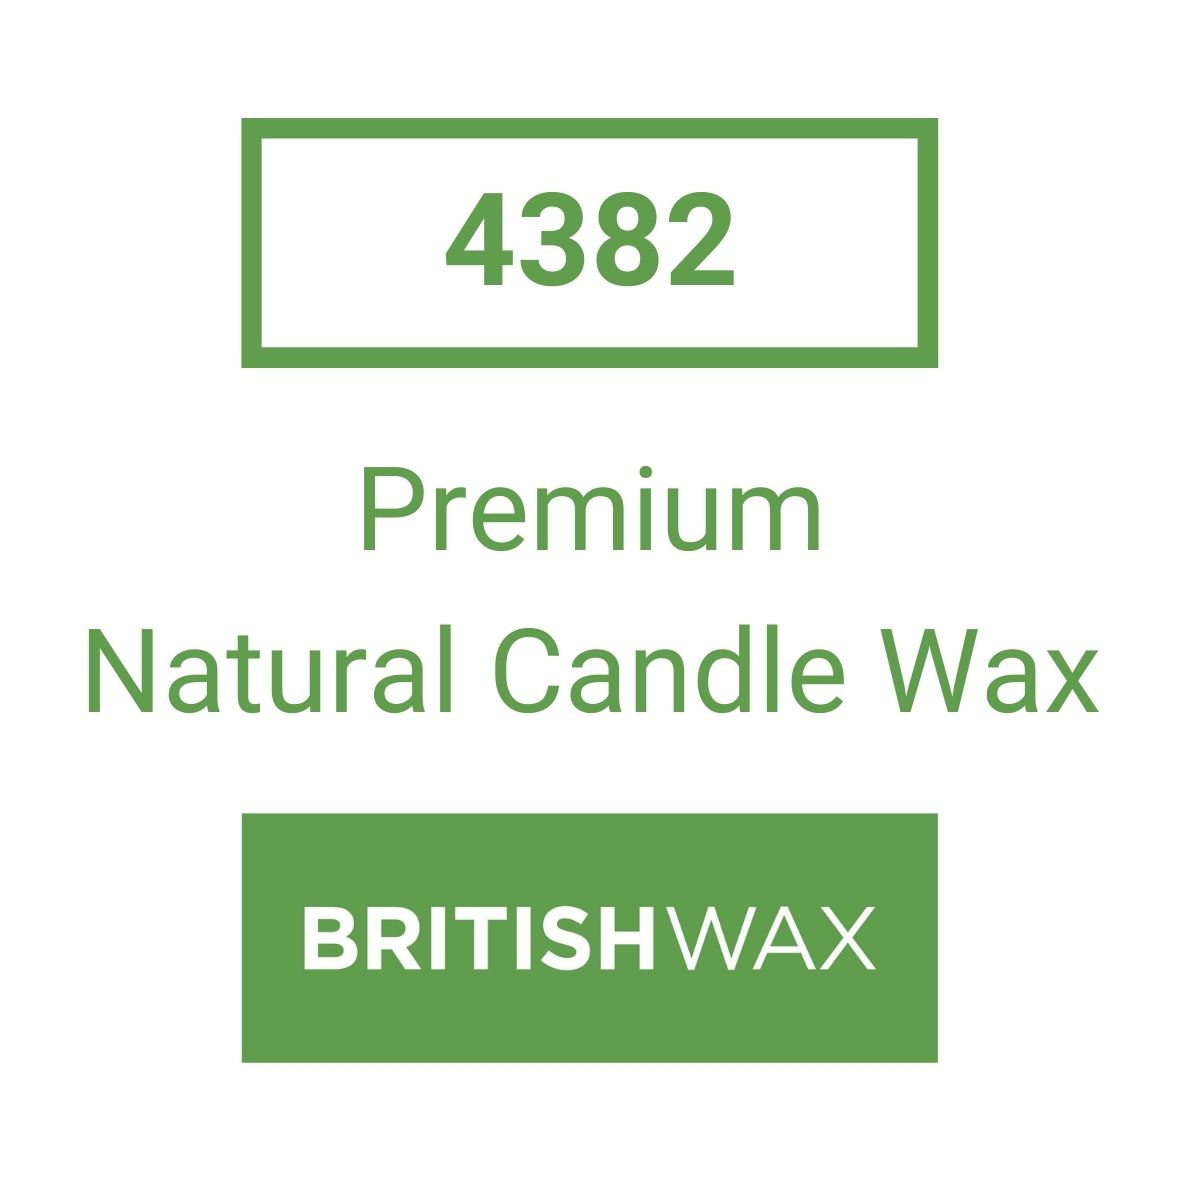 Premium Natural Candle Wax 4382